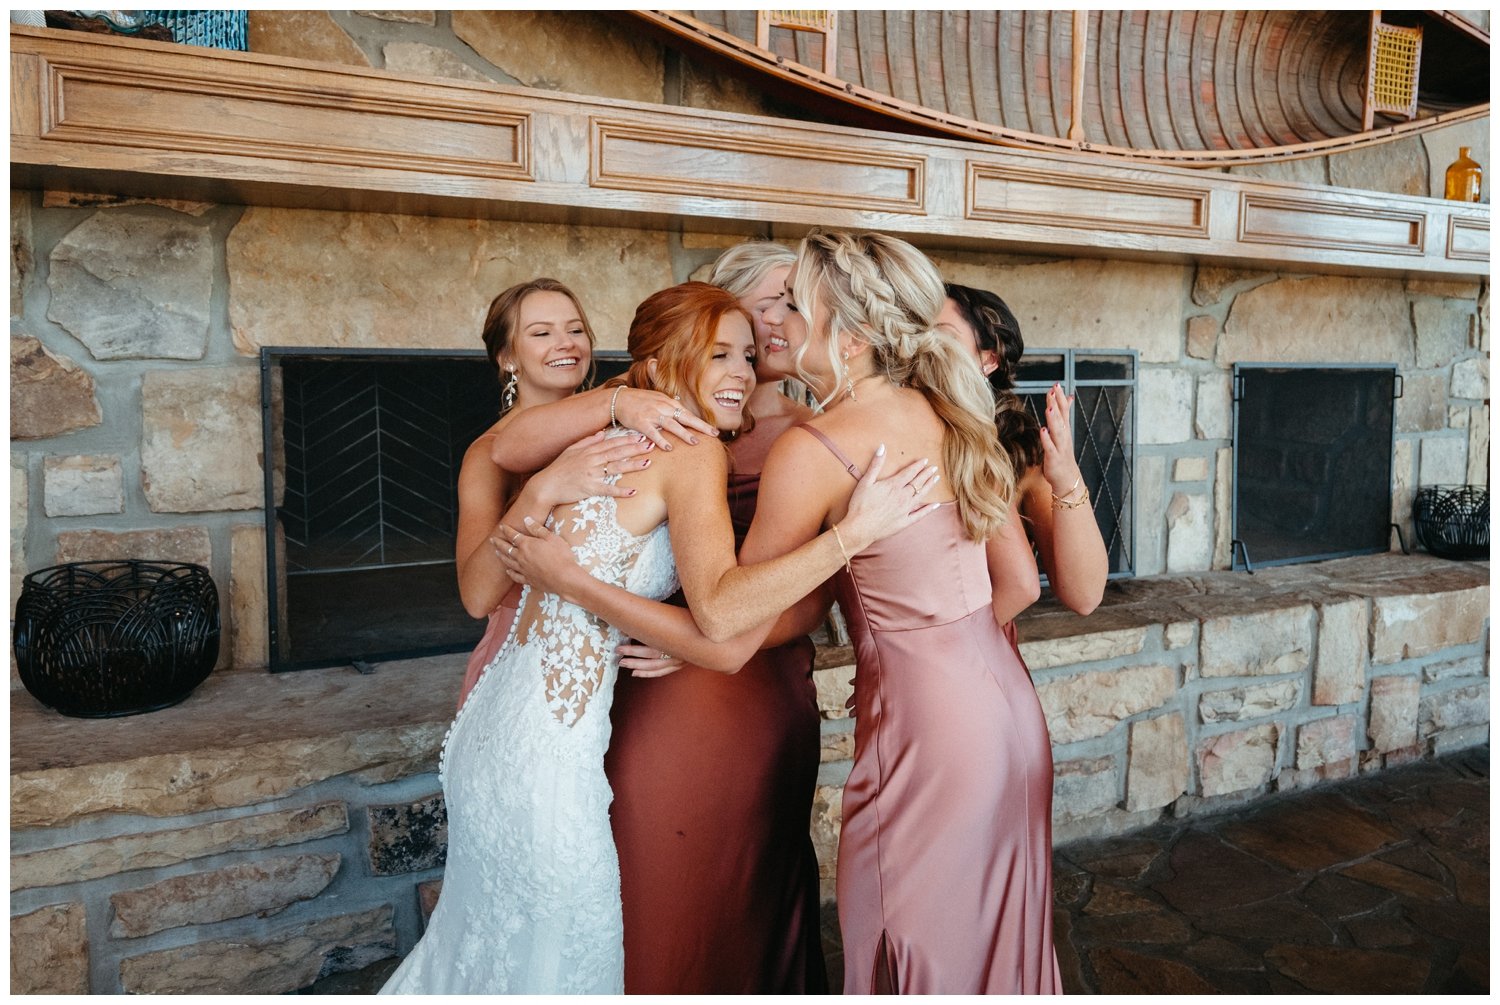 The bride and bridesmaids hug at the mountain wedding venue